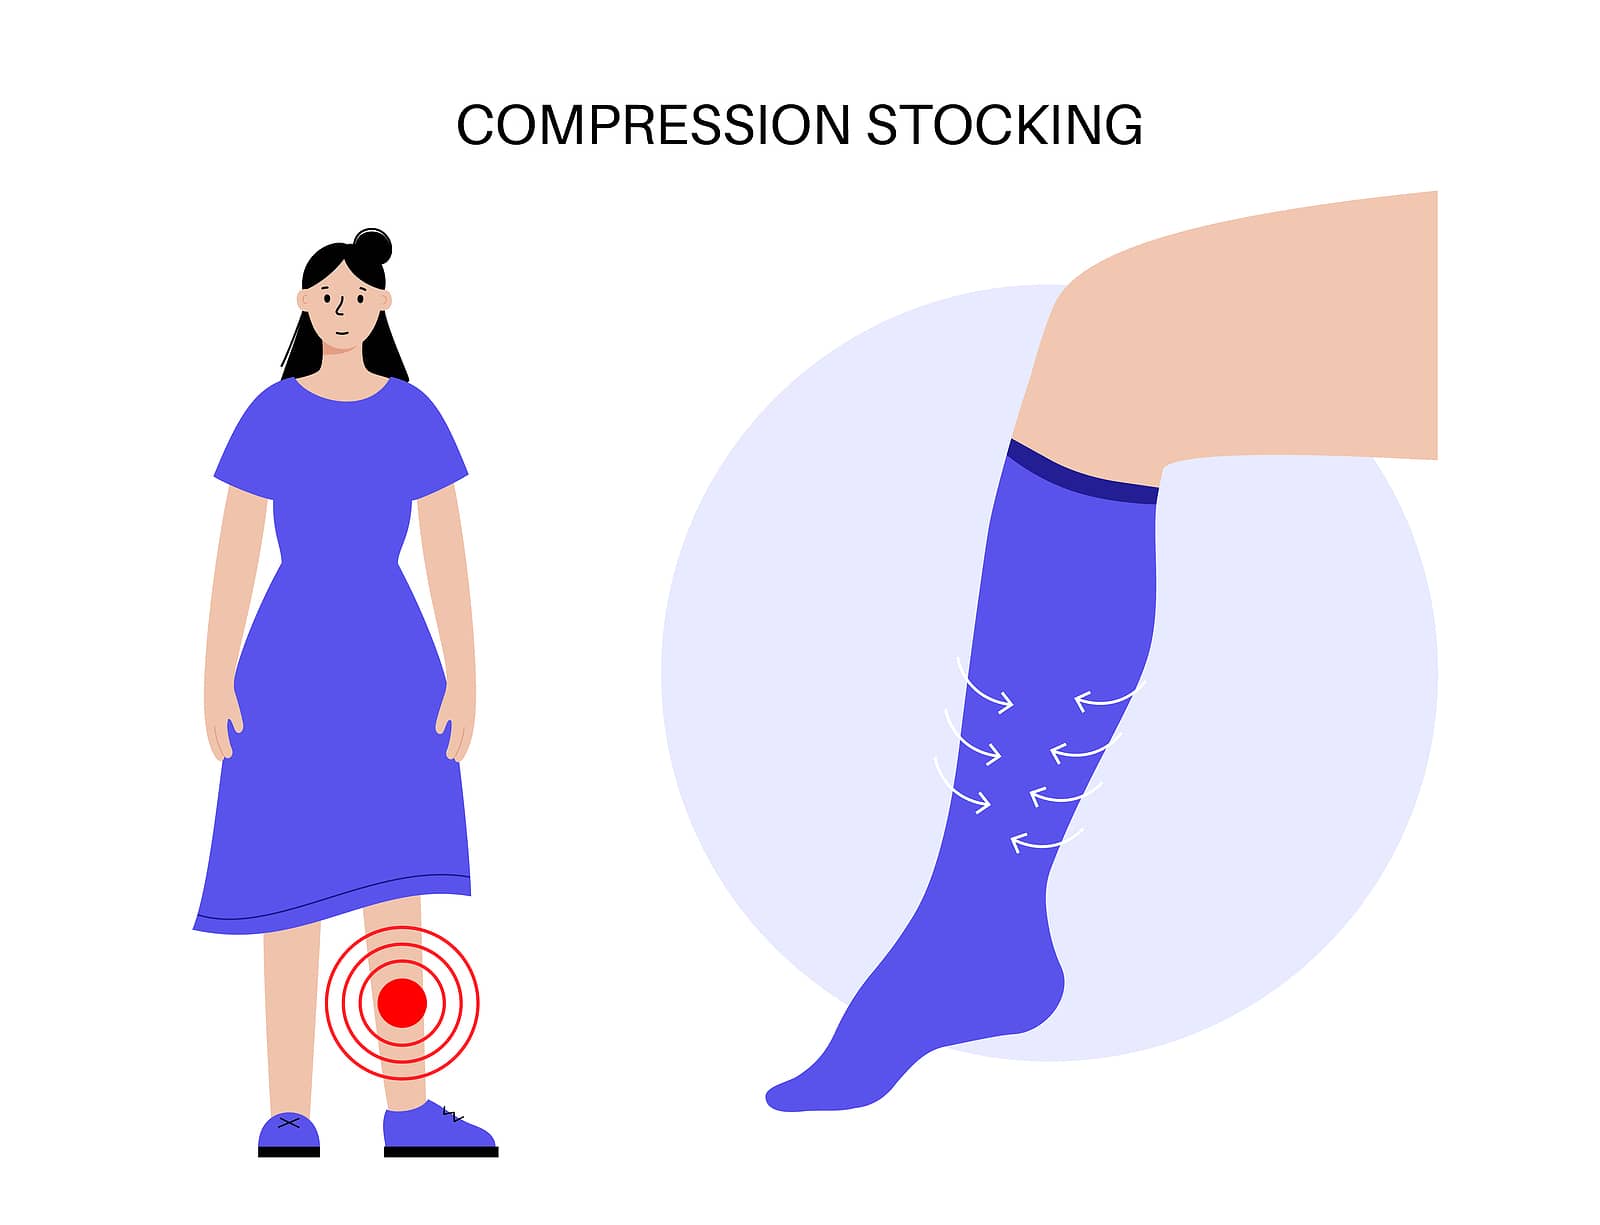 Compression Garments Through Insurance